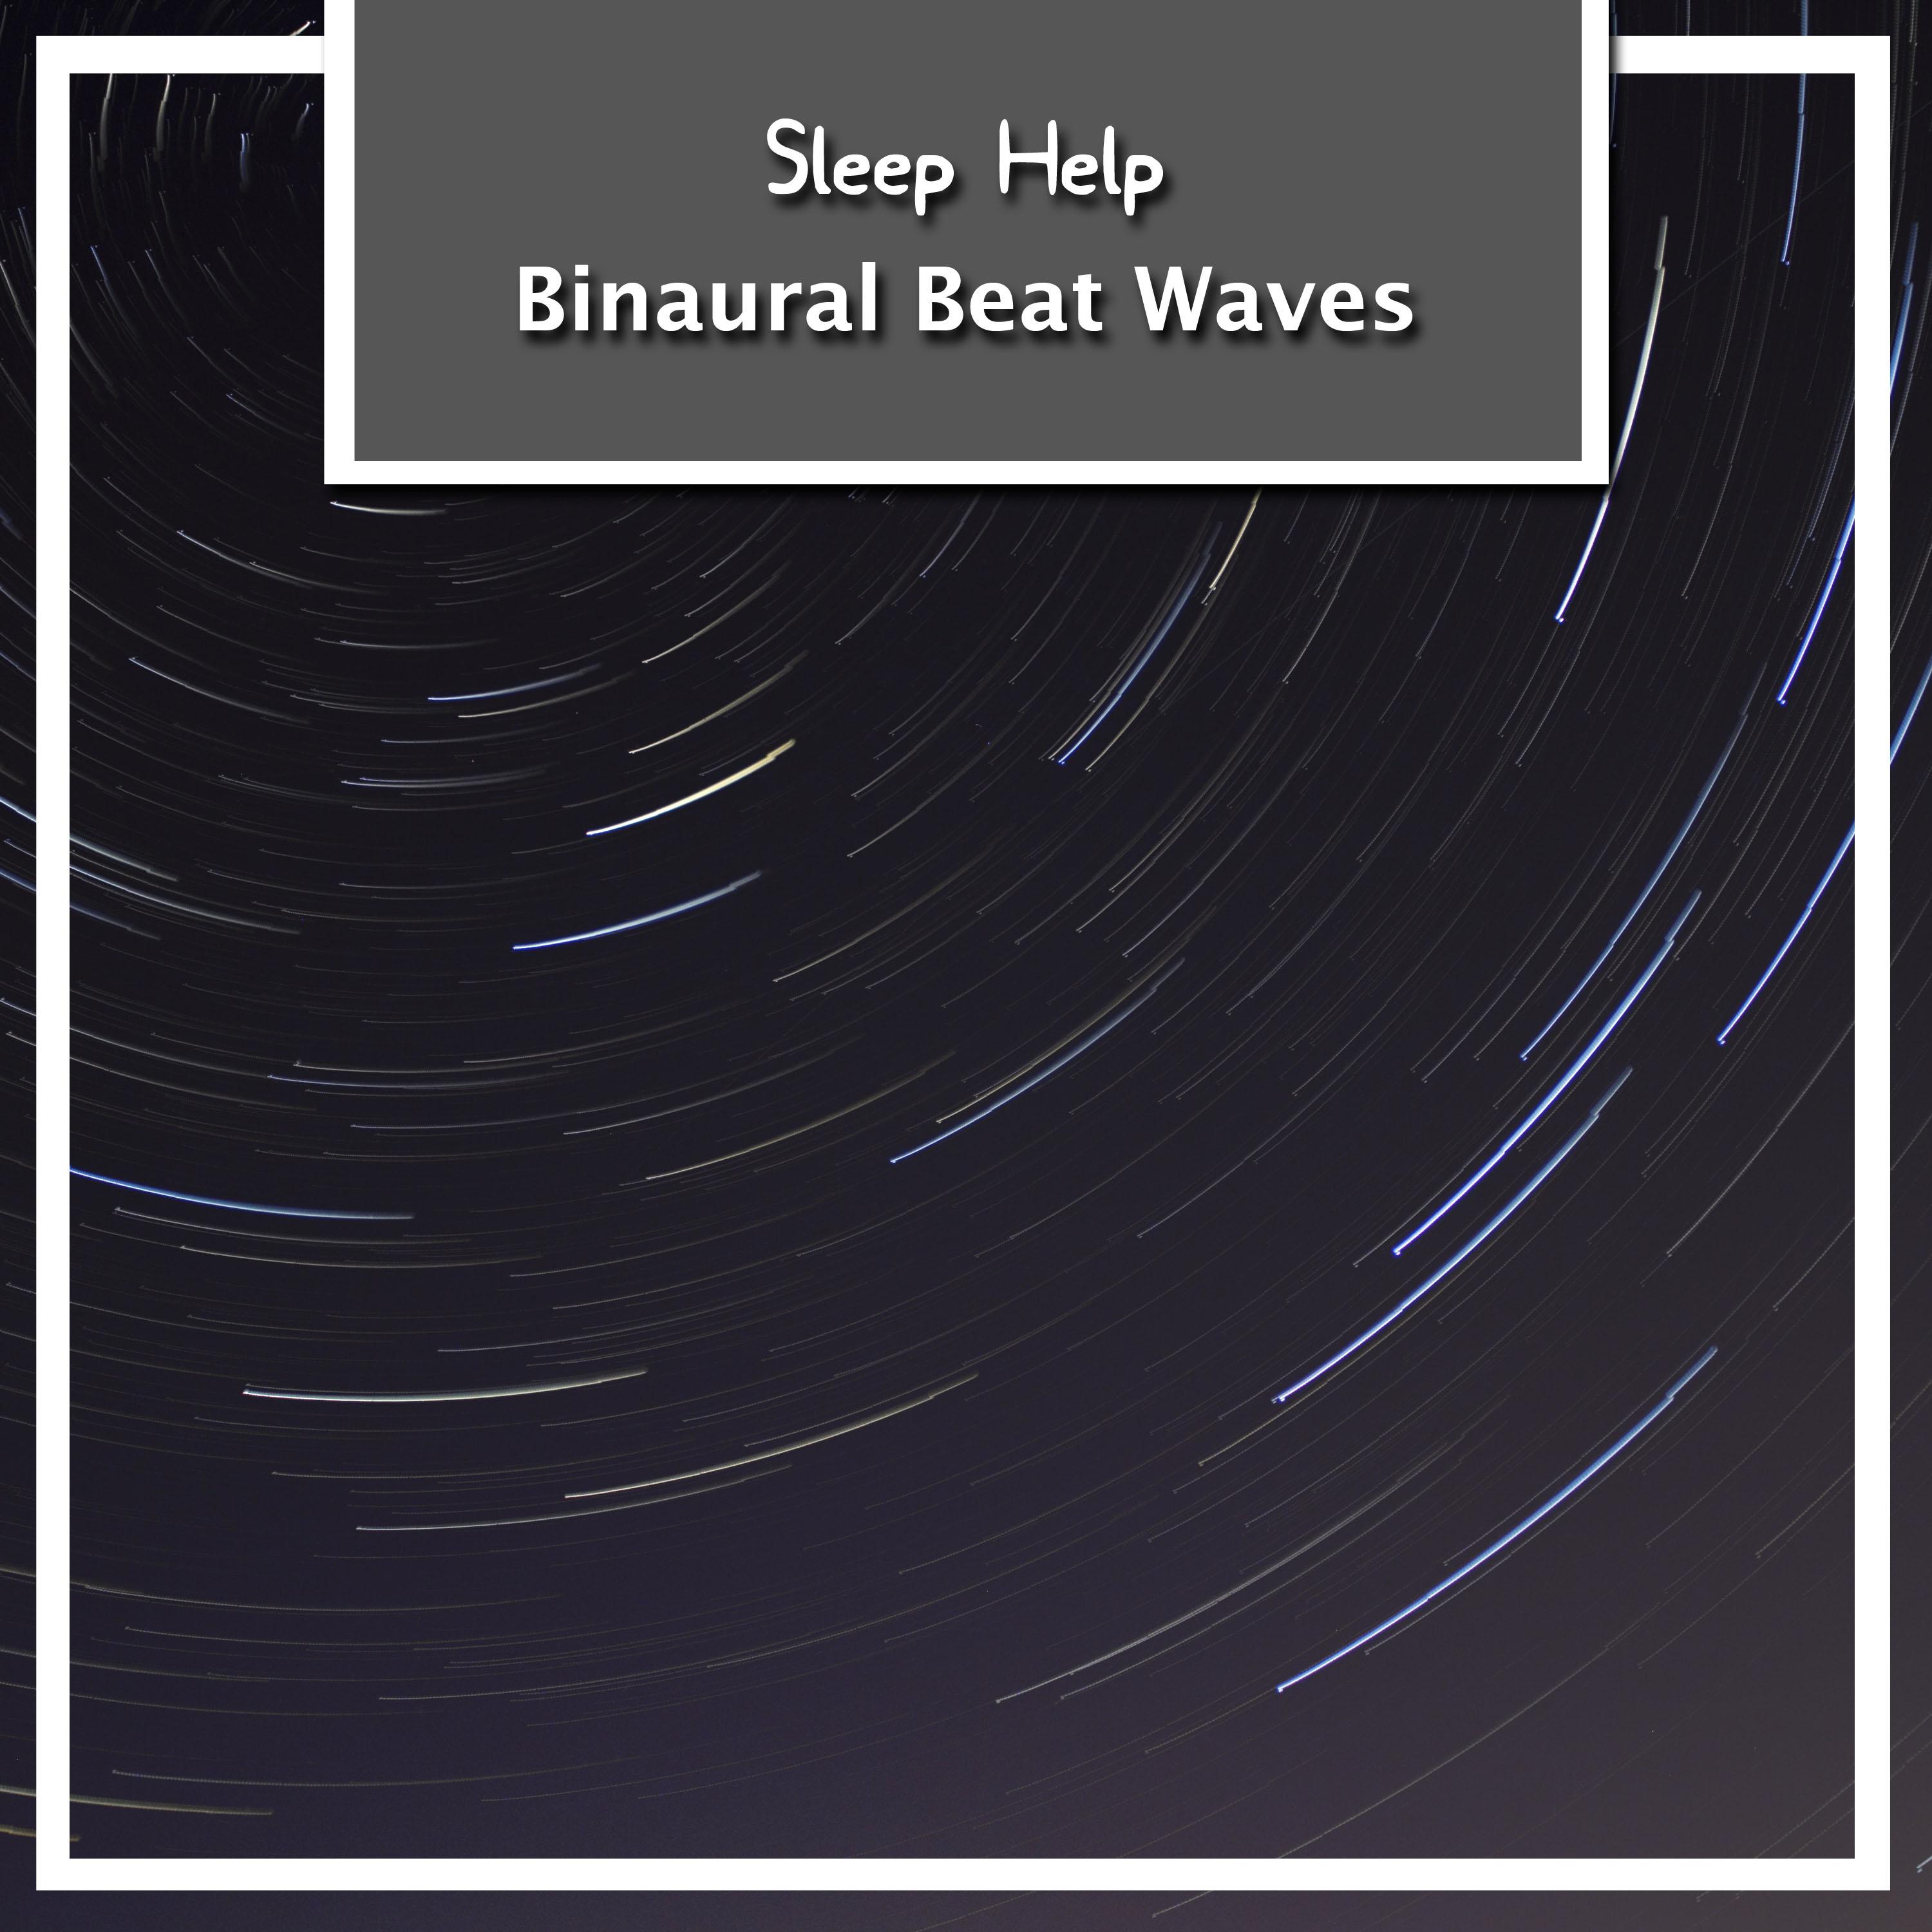 12 Sleep Help Binaural Beat Waves